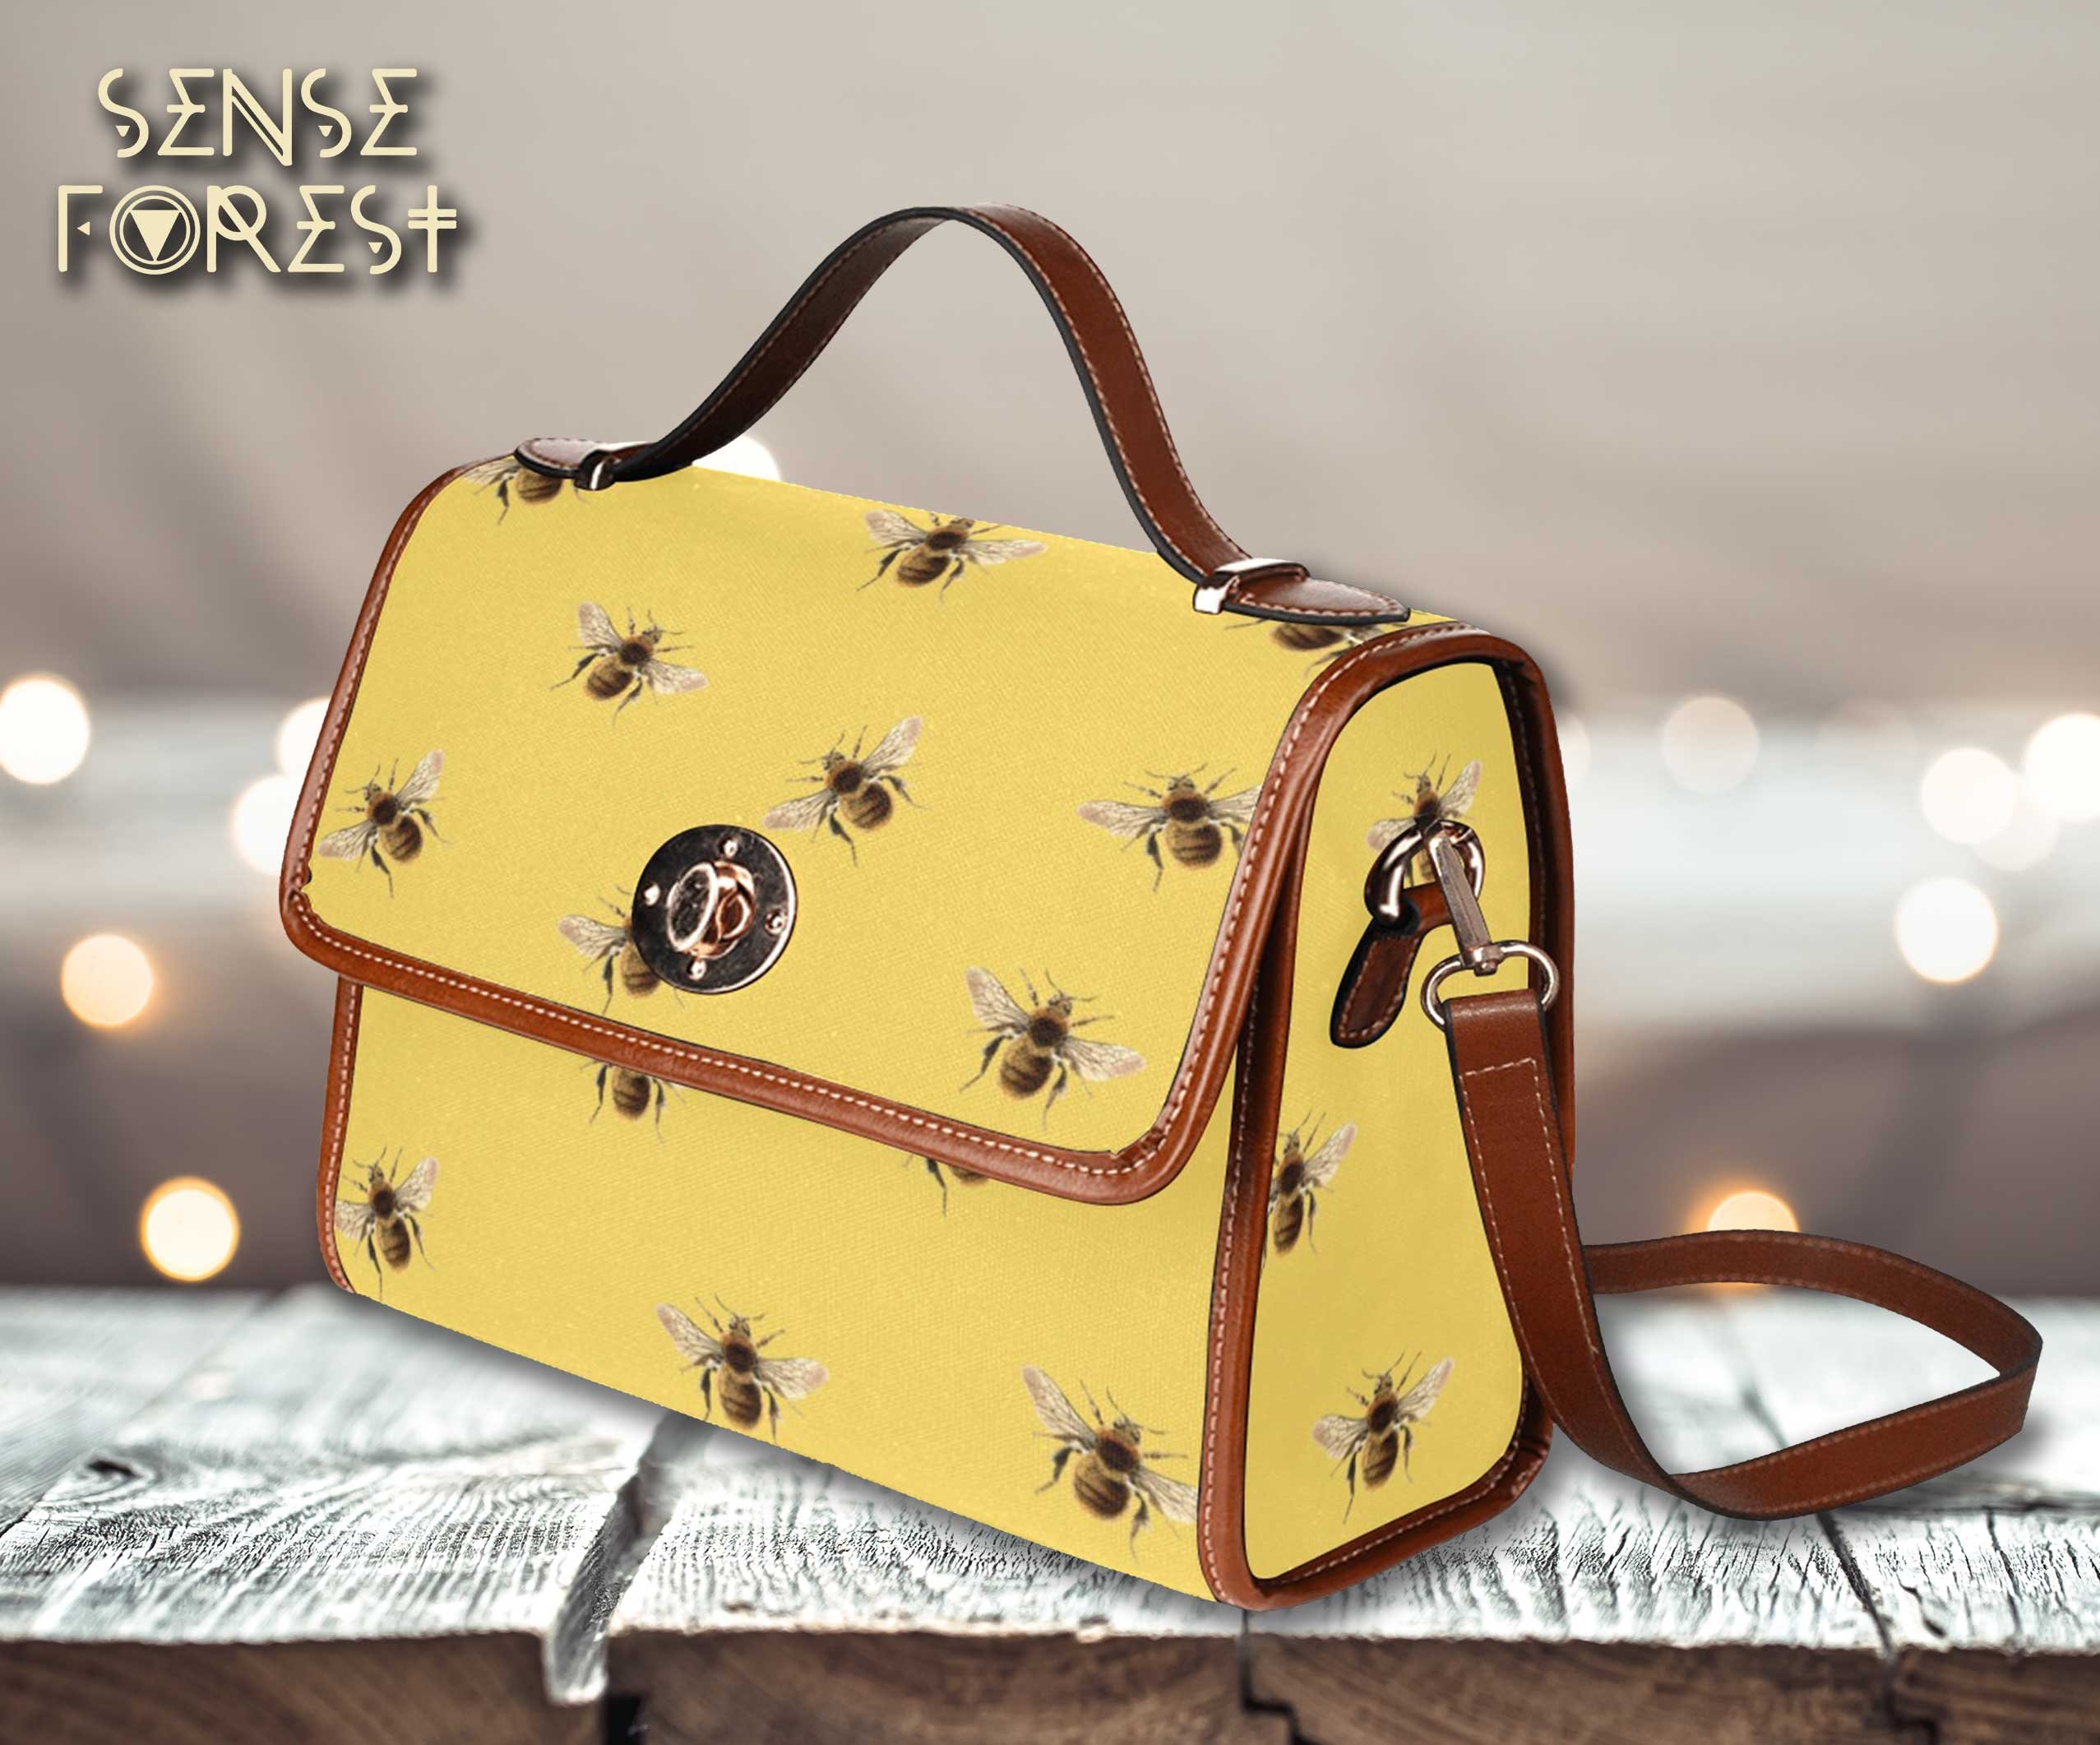 Honey Bee Shoulder Purse, Cute Bumble Yellow White Vegan Leather Top Handle Handbag Print Small Bag Women Ladies Designer